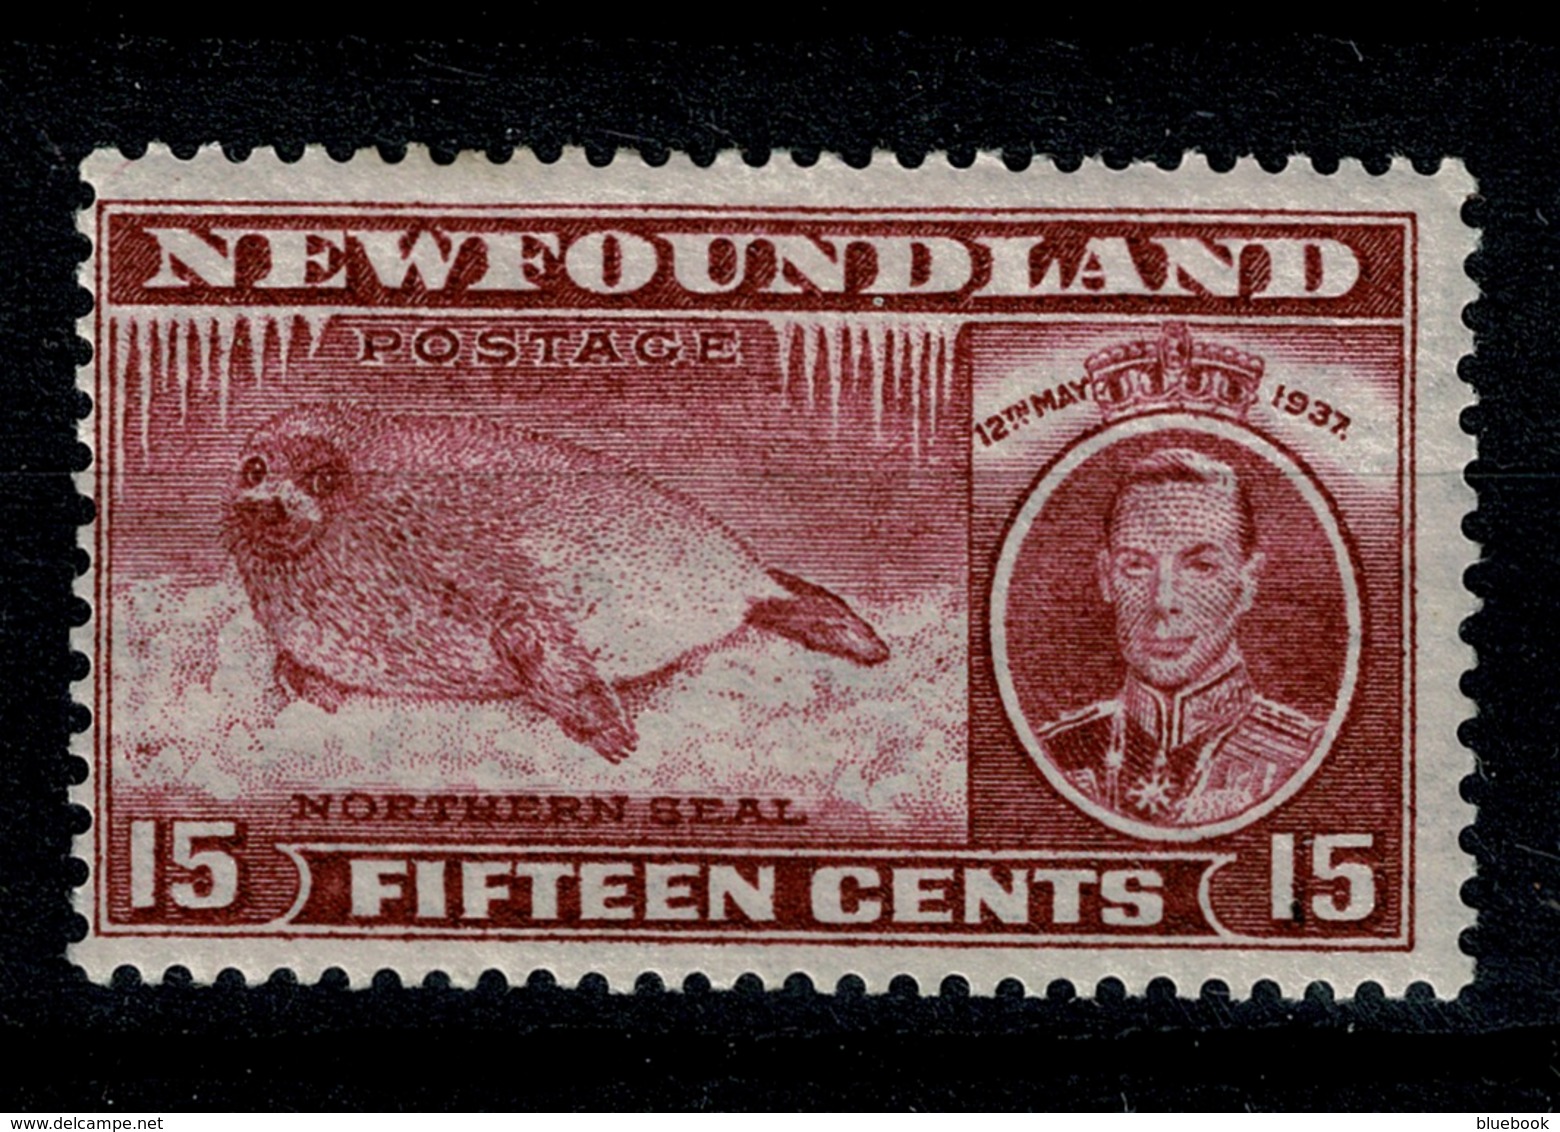 Ref 1289 - Canada Newfoundland 1937 Coronation 15c - SG 263c Perf 13.5 MNH Stamp Cat £21+ - 1908-1947